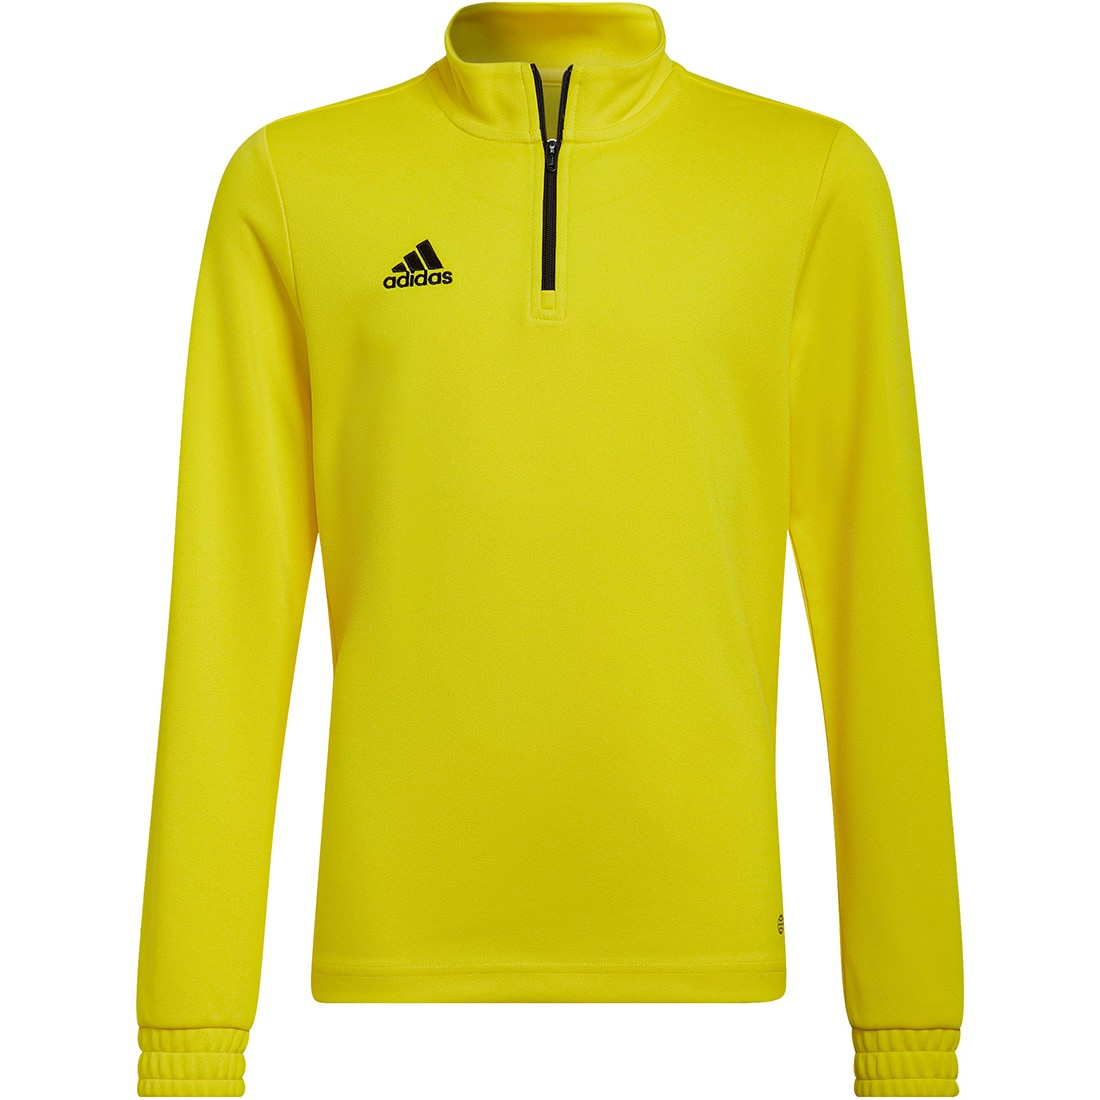 Adidas Kinder Trainingstop Entrada 22 gelb-schwarz